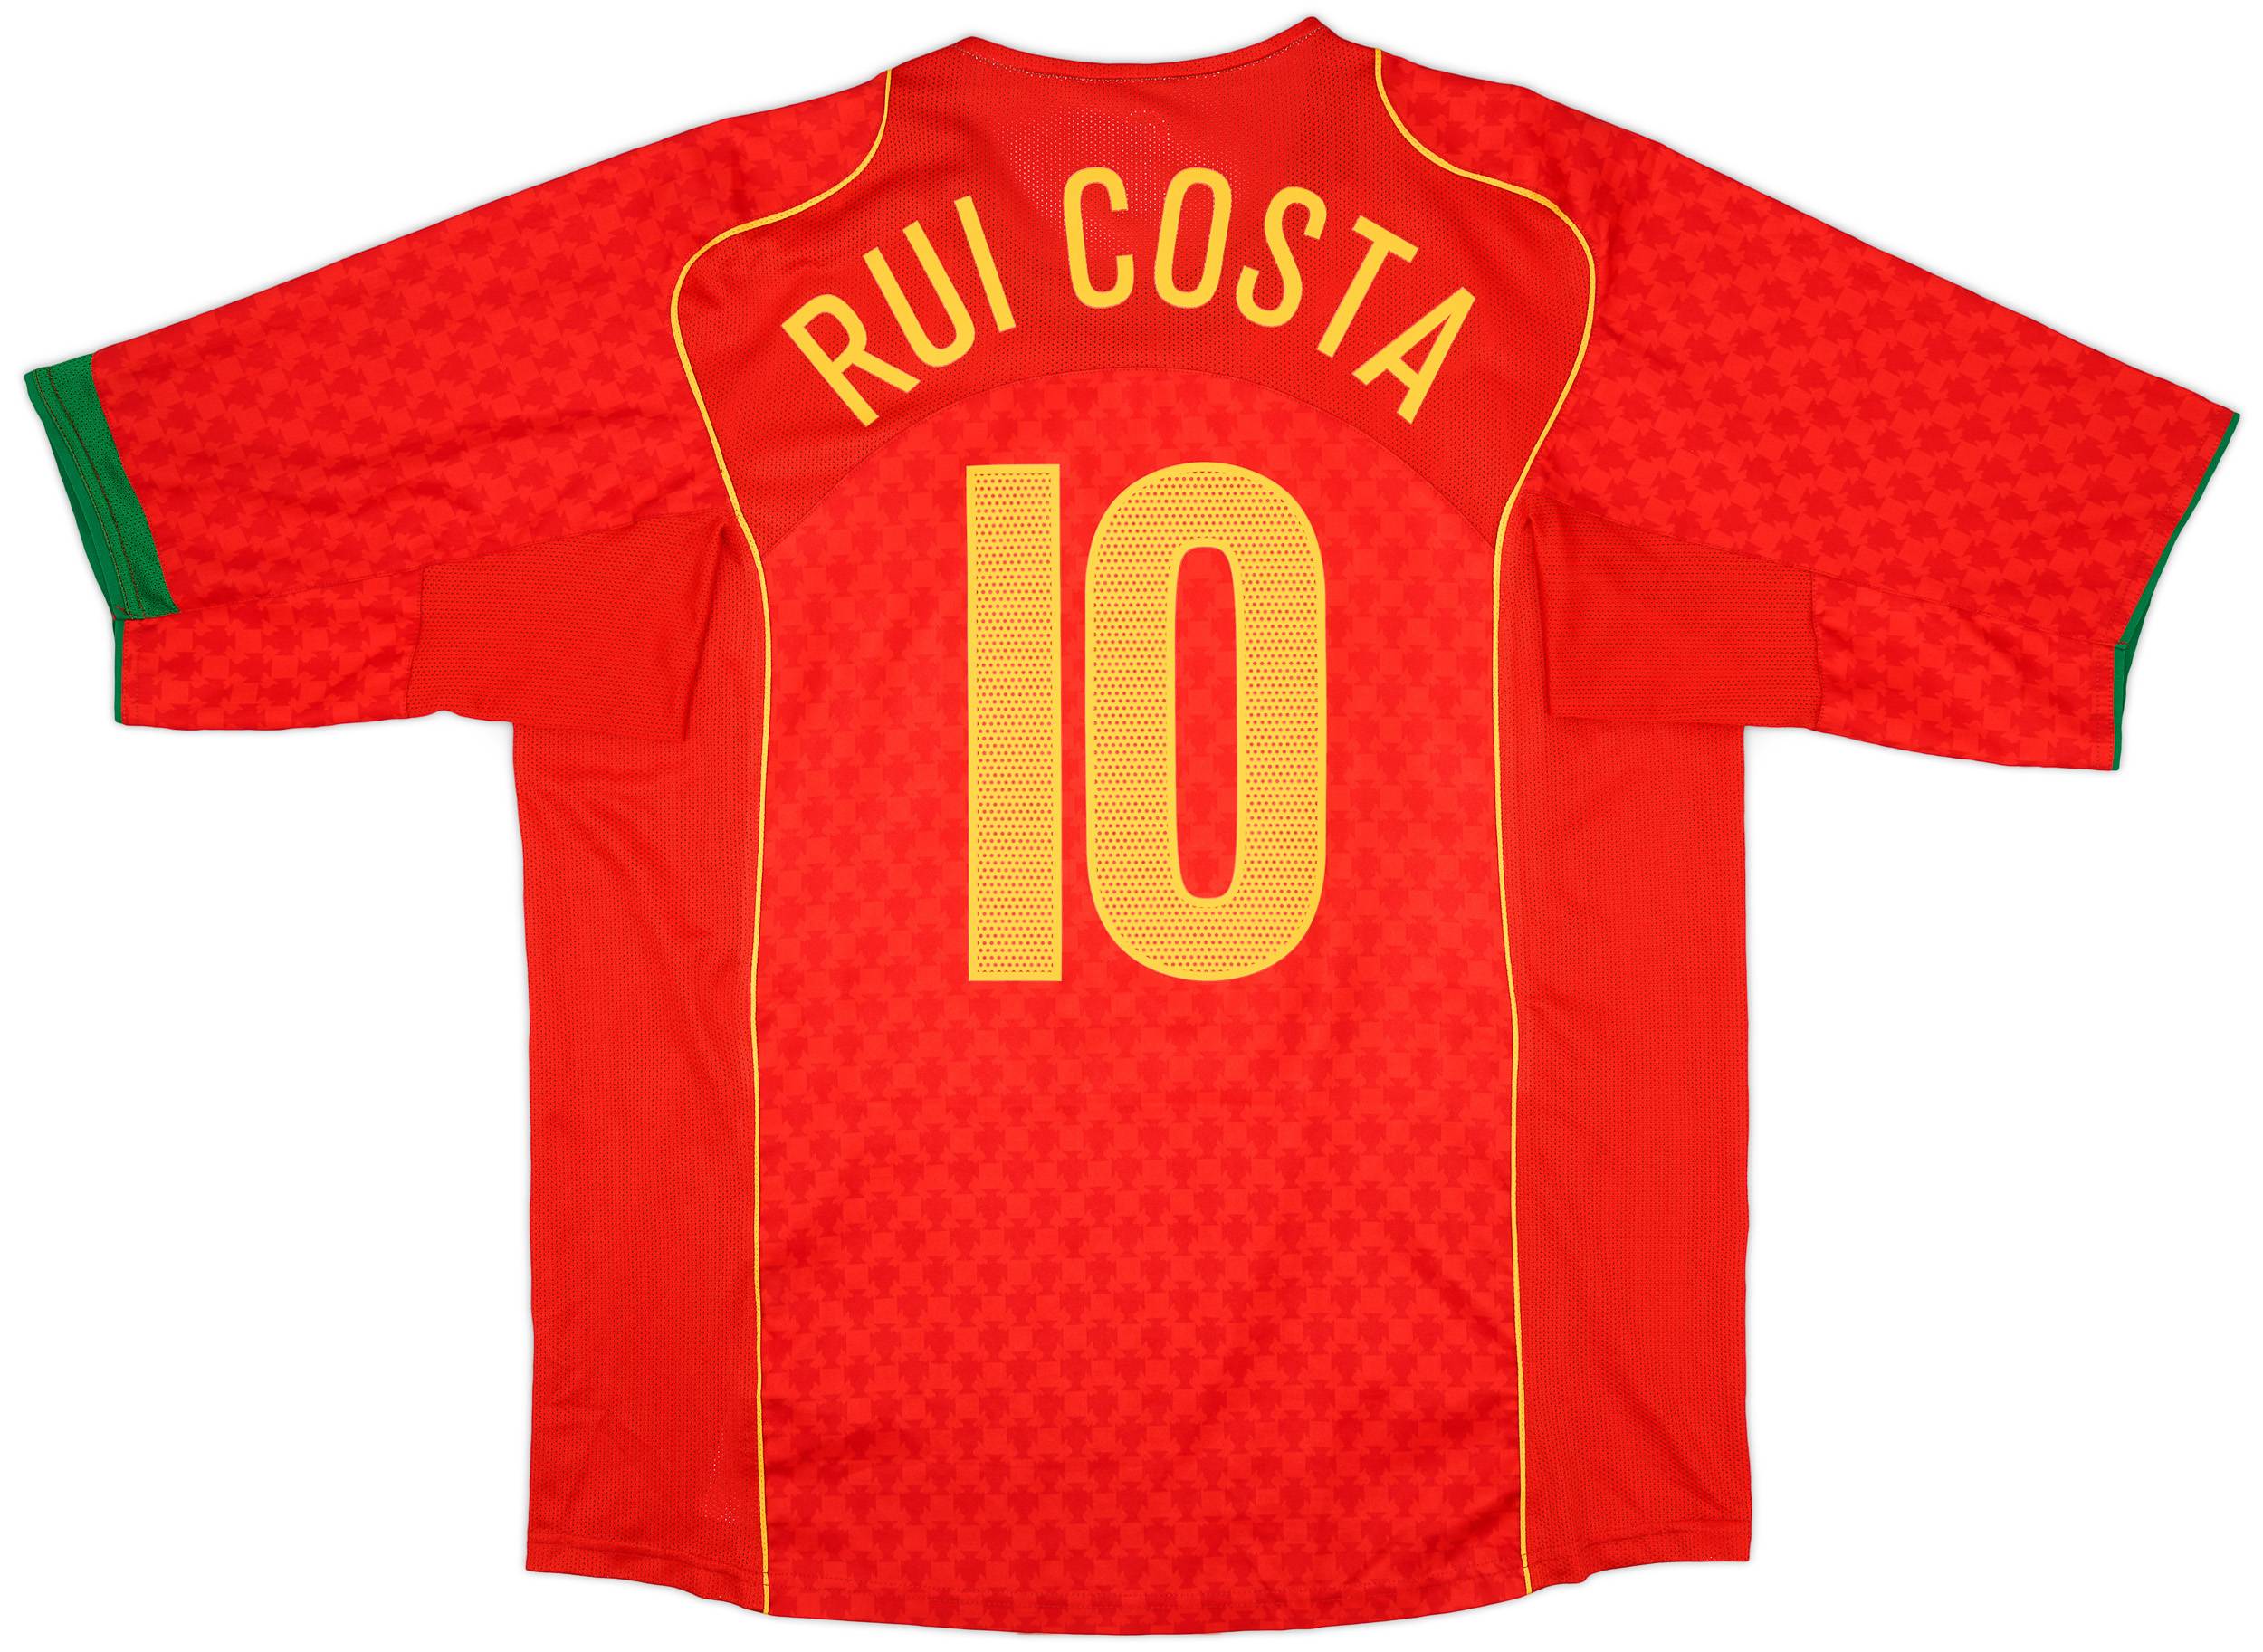 2004-06 Portugal Home Shirt Rui Costa #10 - 9/10 - (XL)